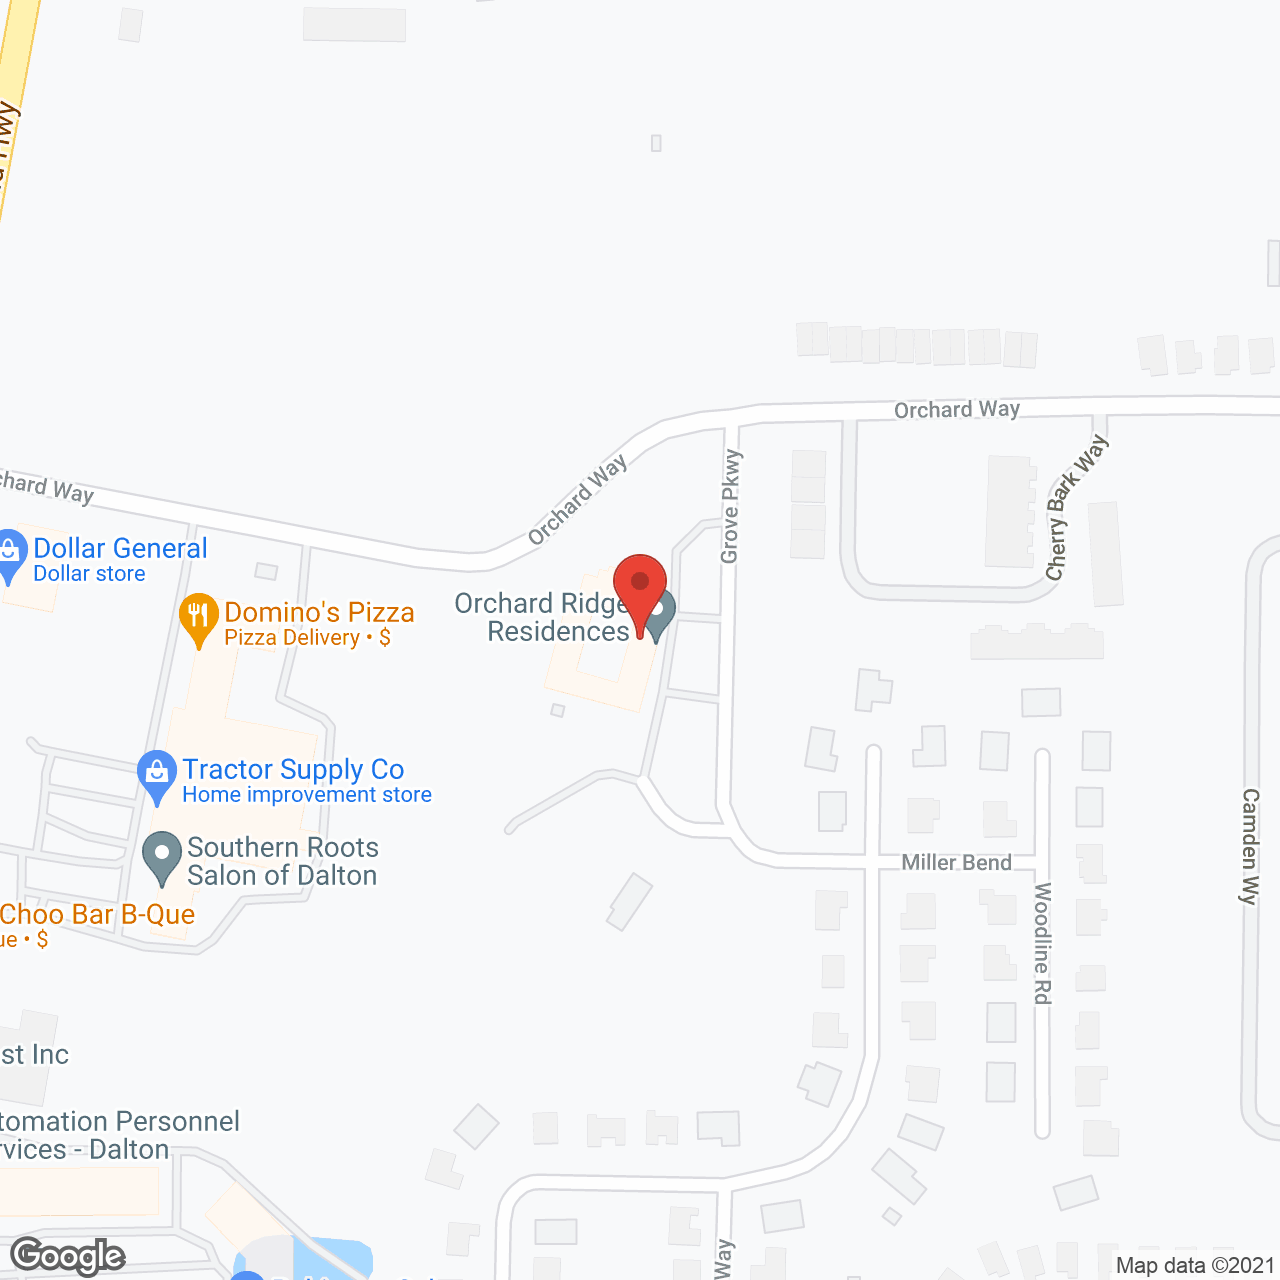 Orchard Ridge Residences in google map